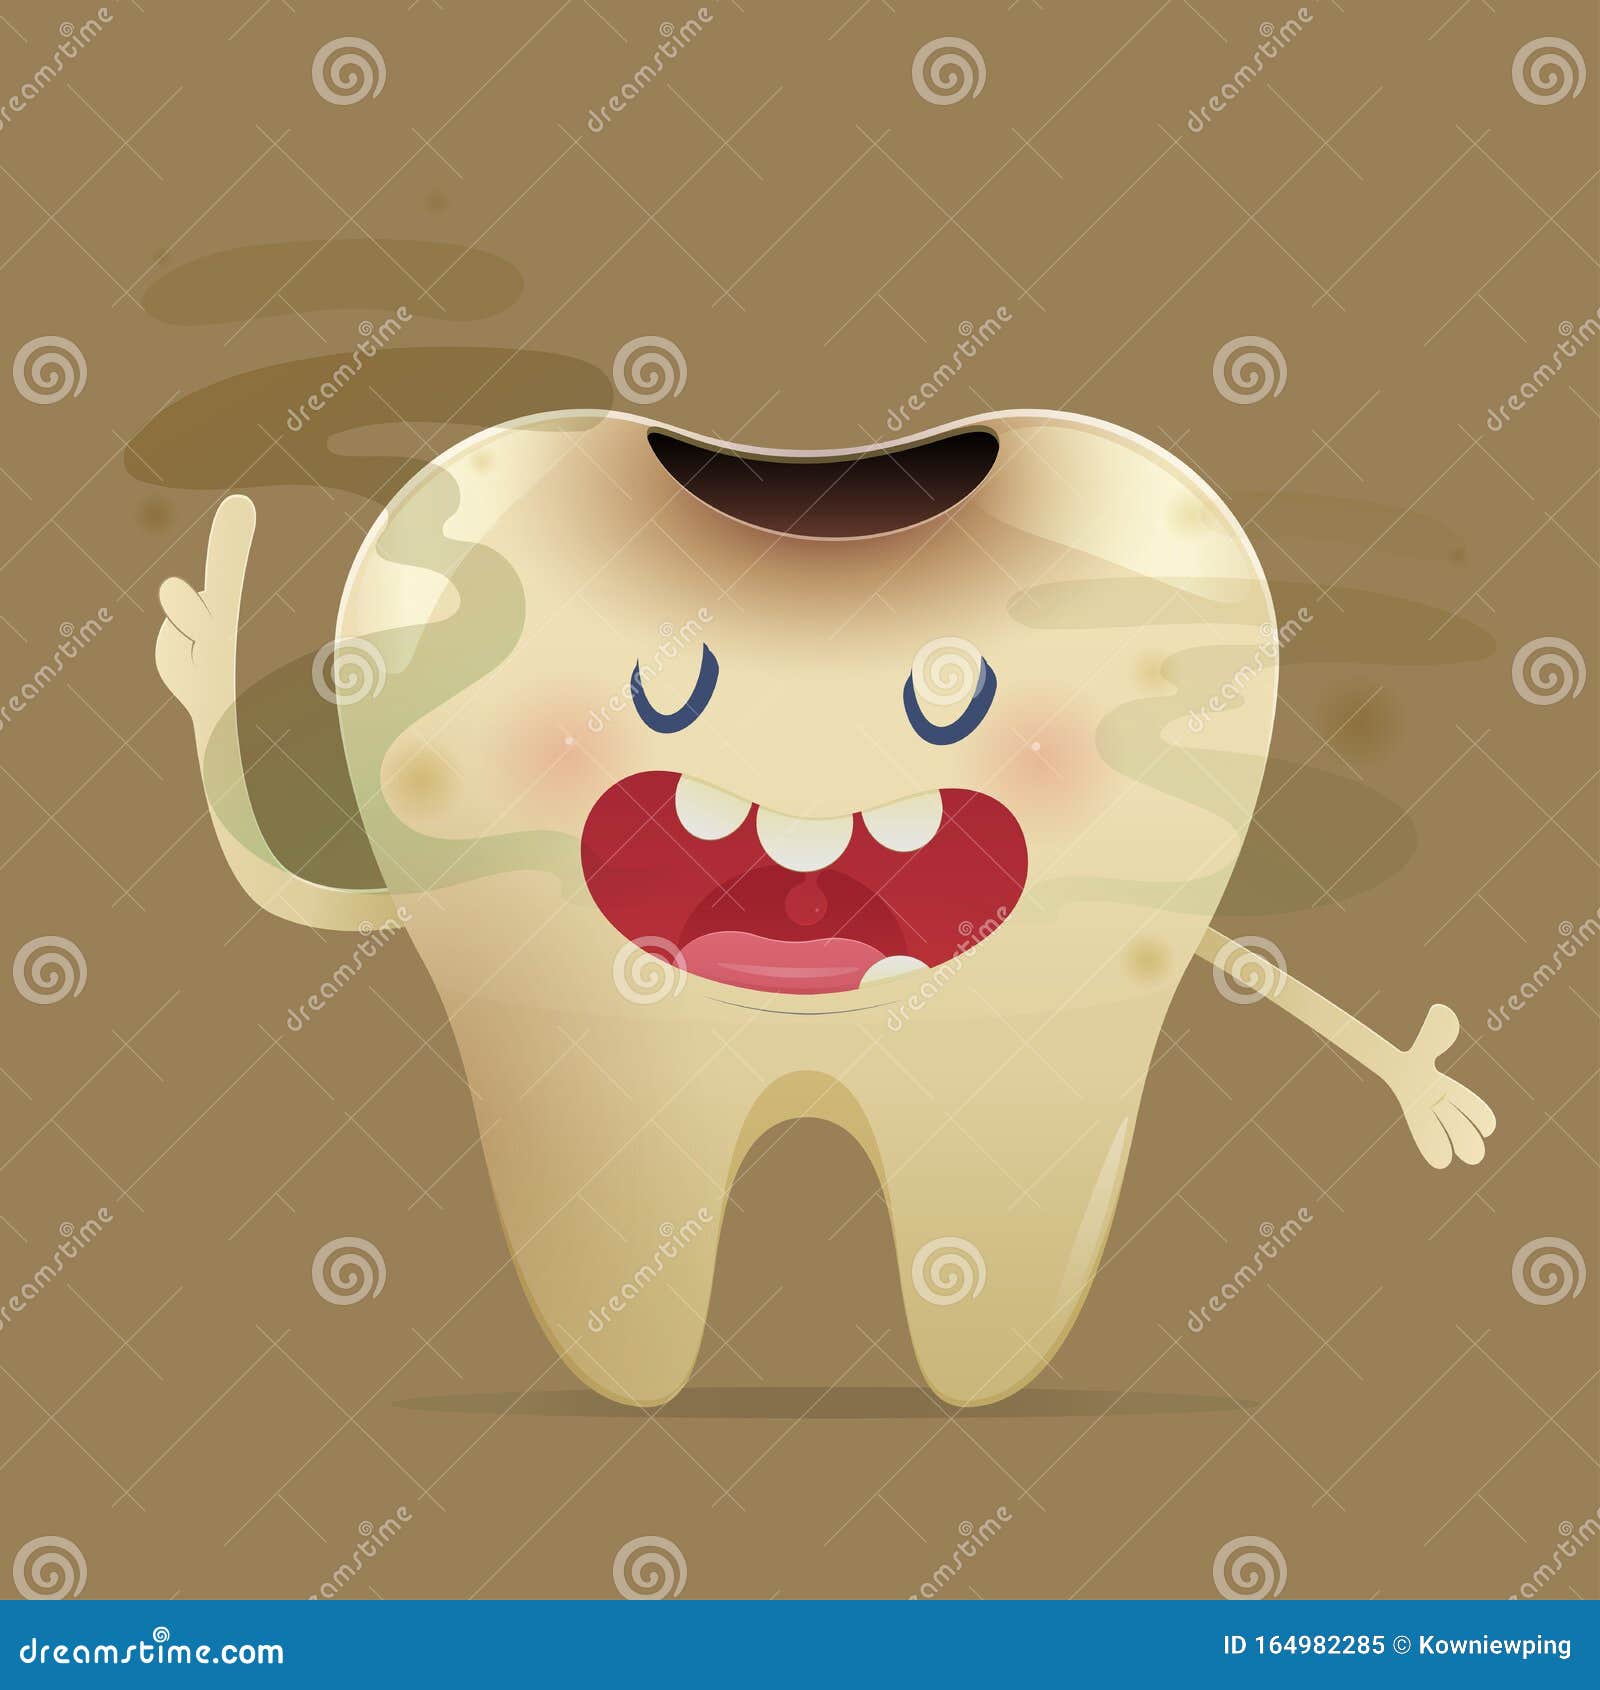 Halitosis Concept of Cartoon Tooth with Bad Breath Stock Vector -  Illustration of boast, cartoon: 164982285